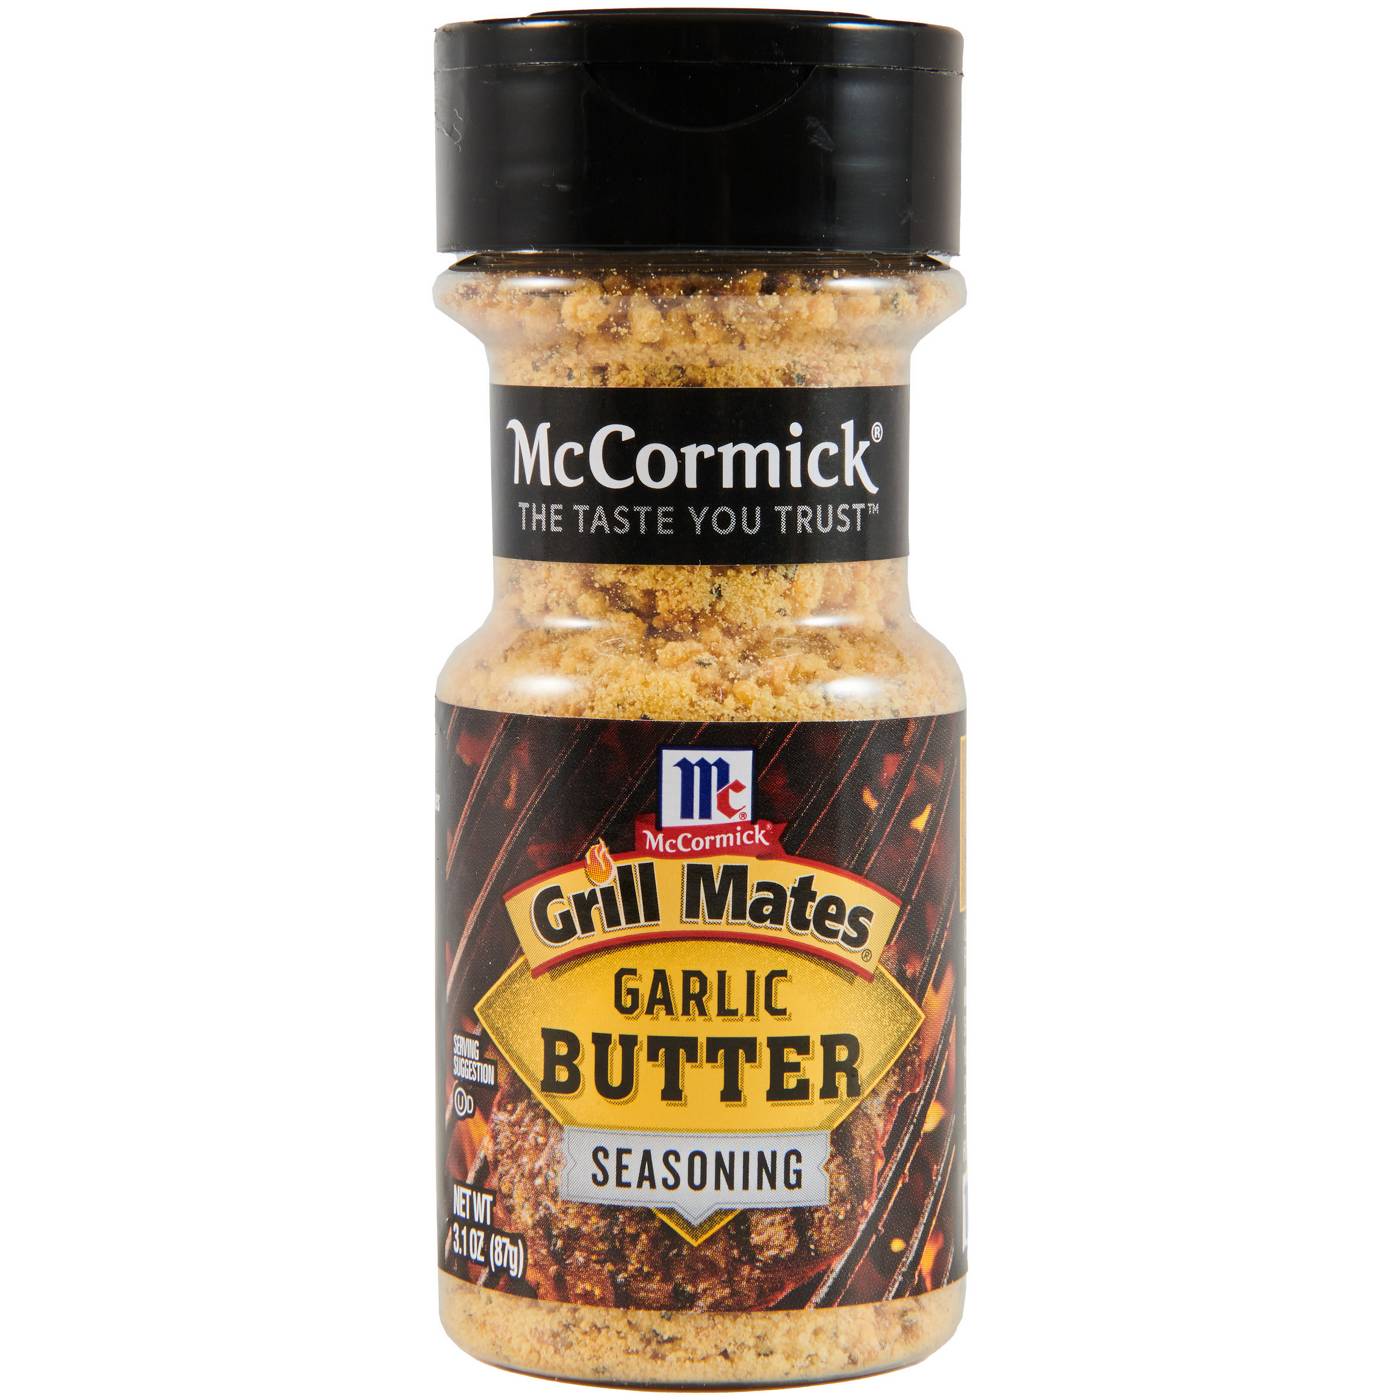 McCormick Grill Mates Garlic Butter Seasoning; image 1 of 7